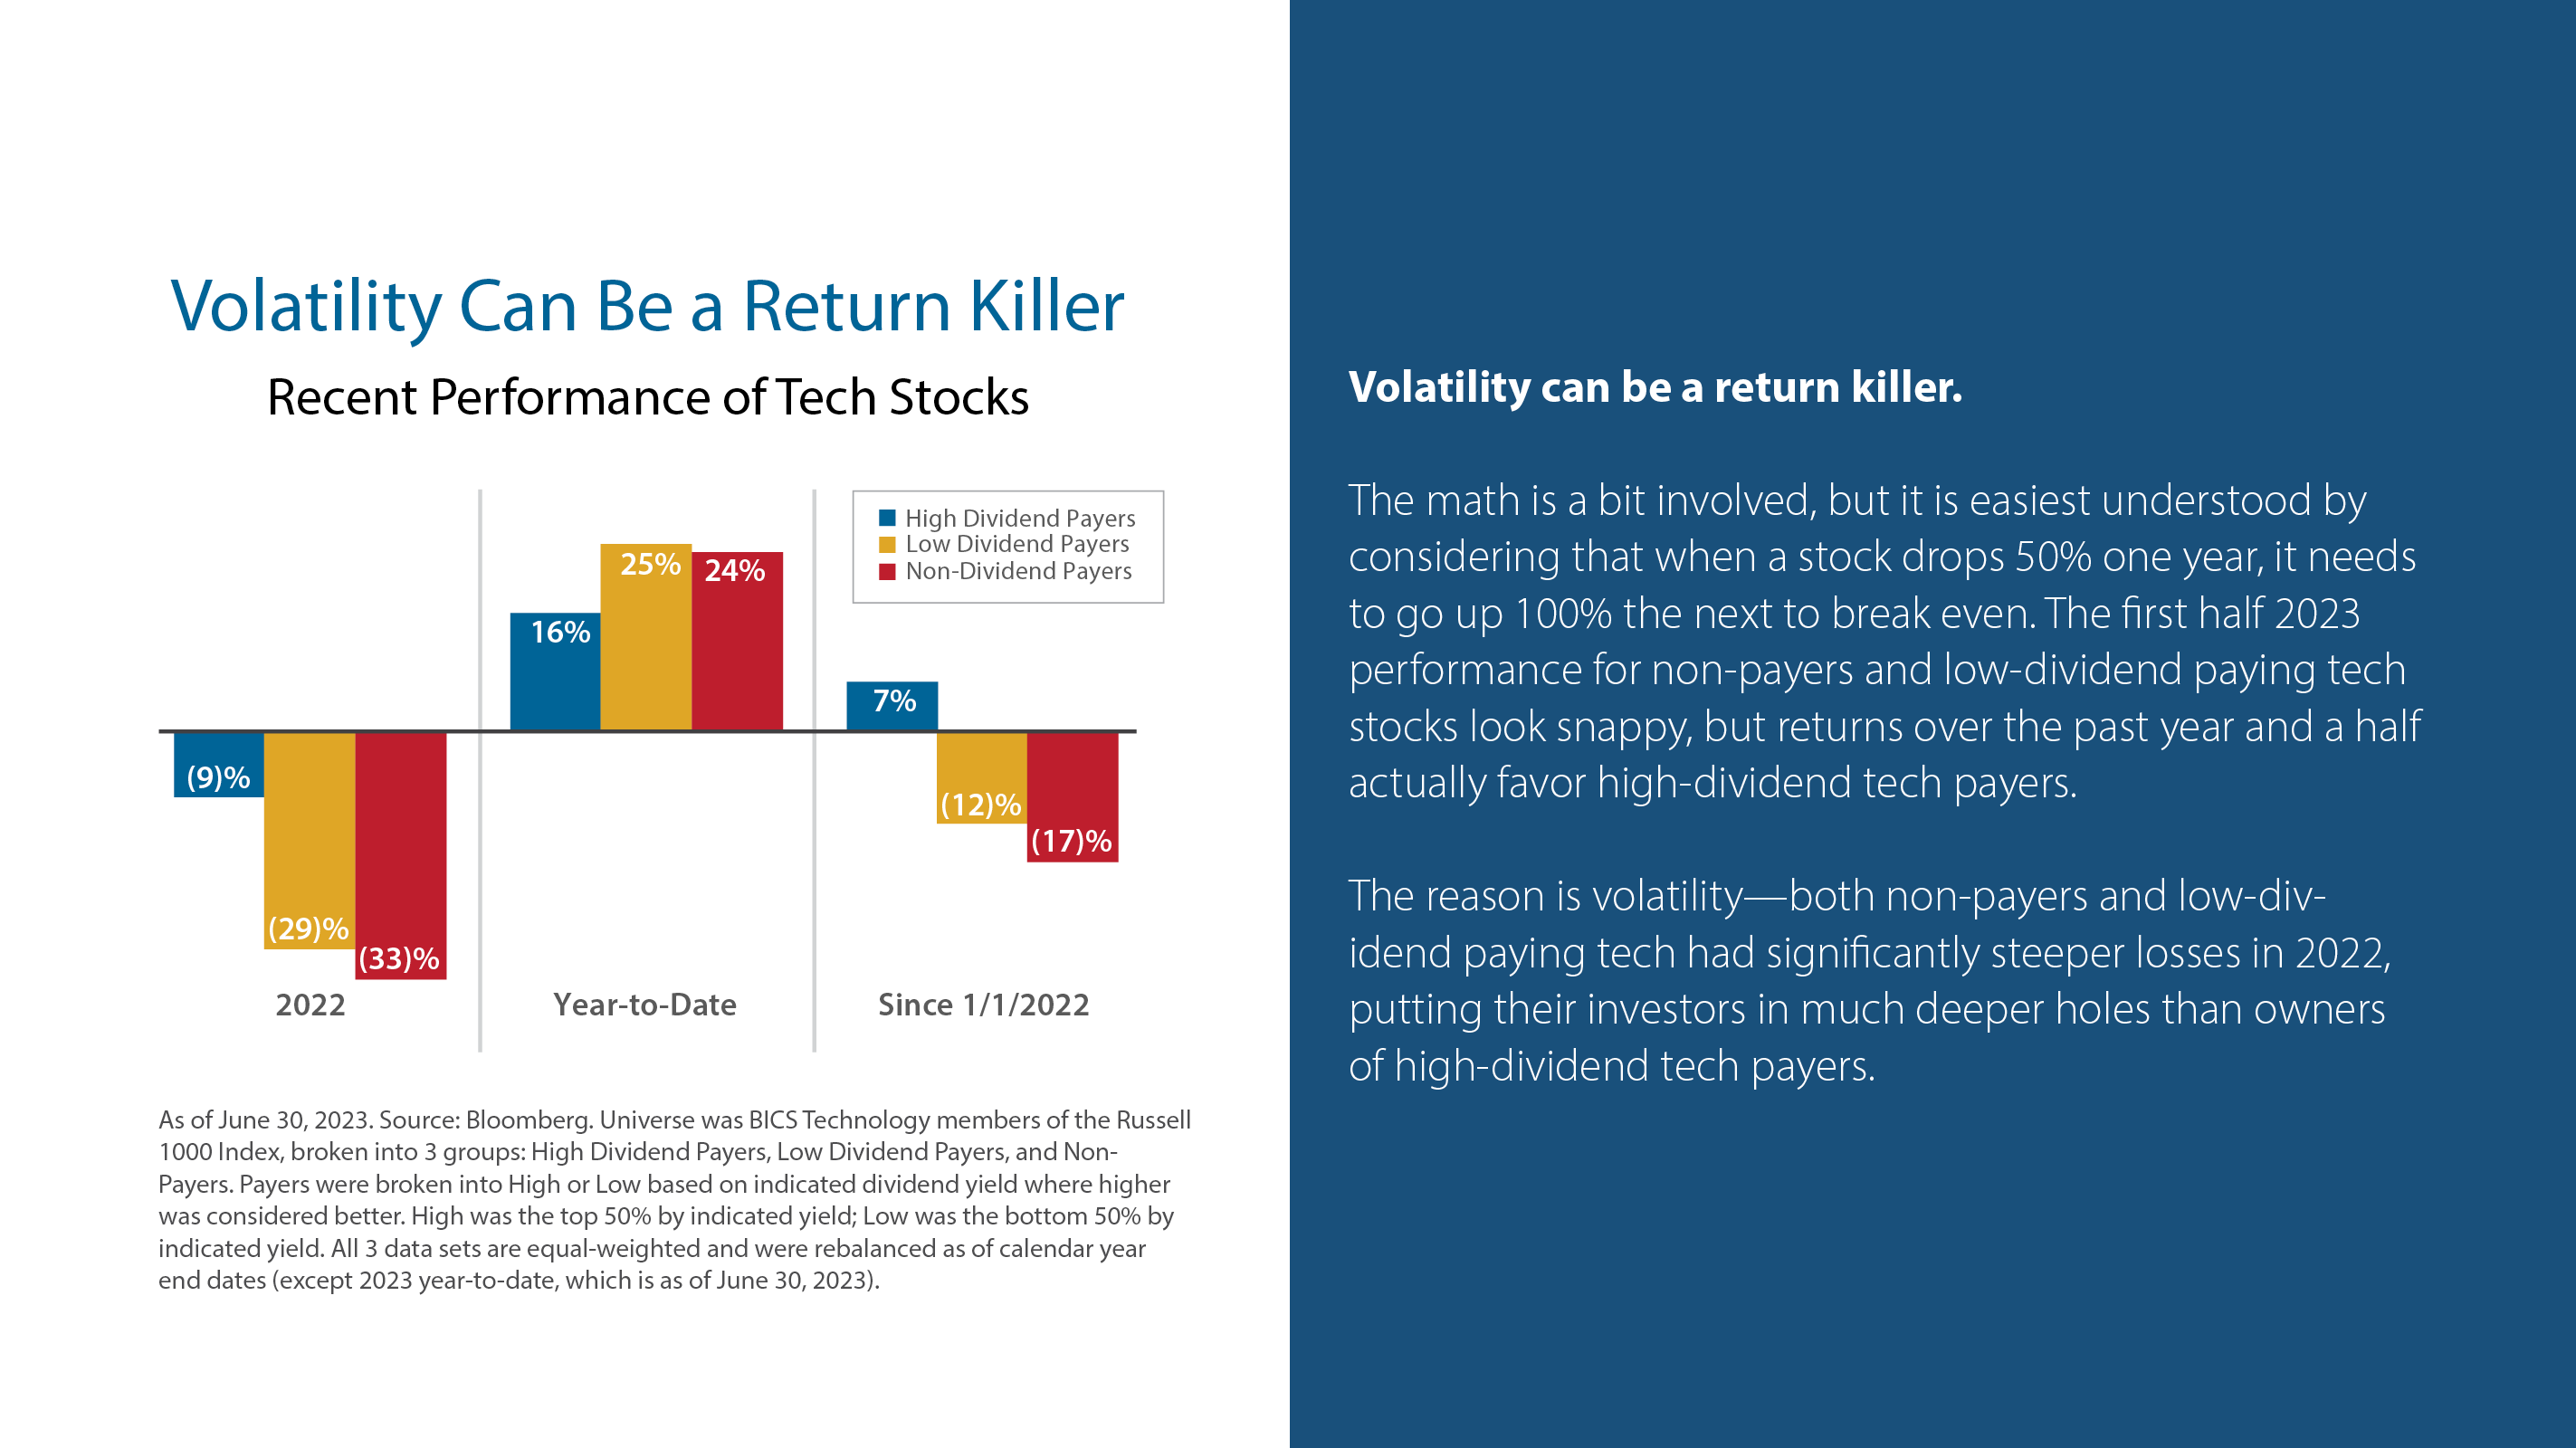 Volatility can be a return killer